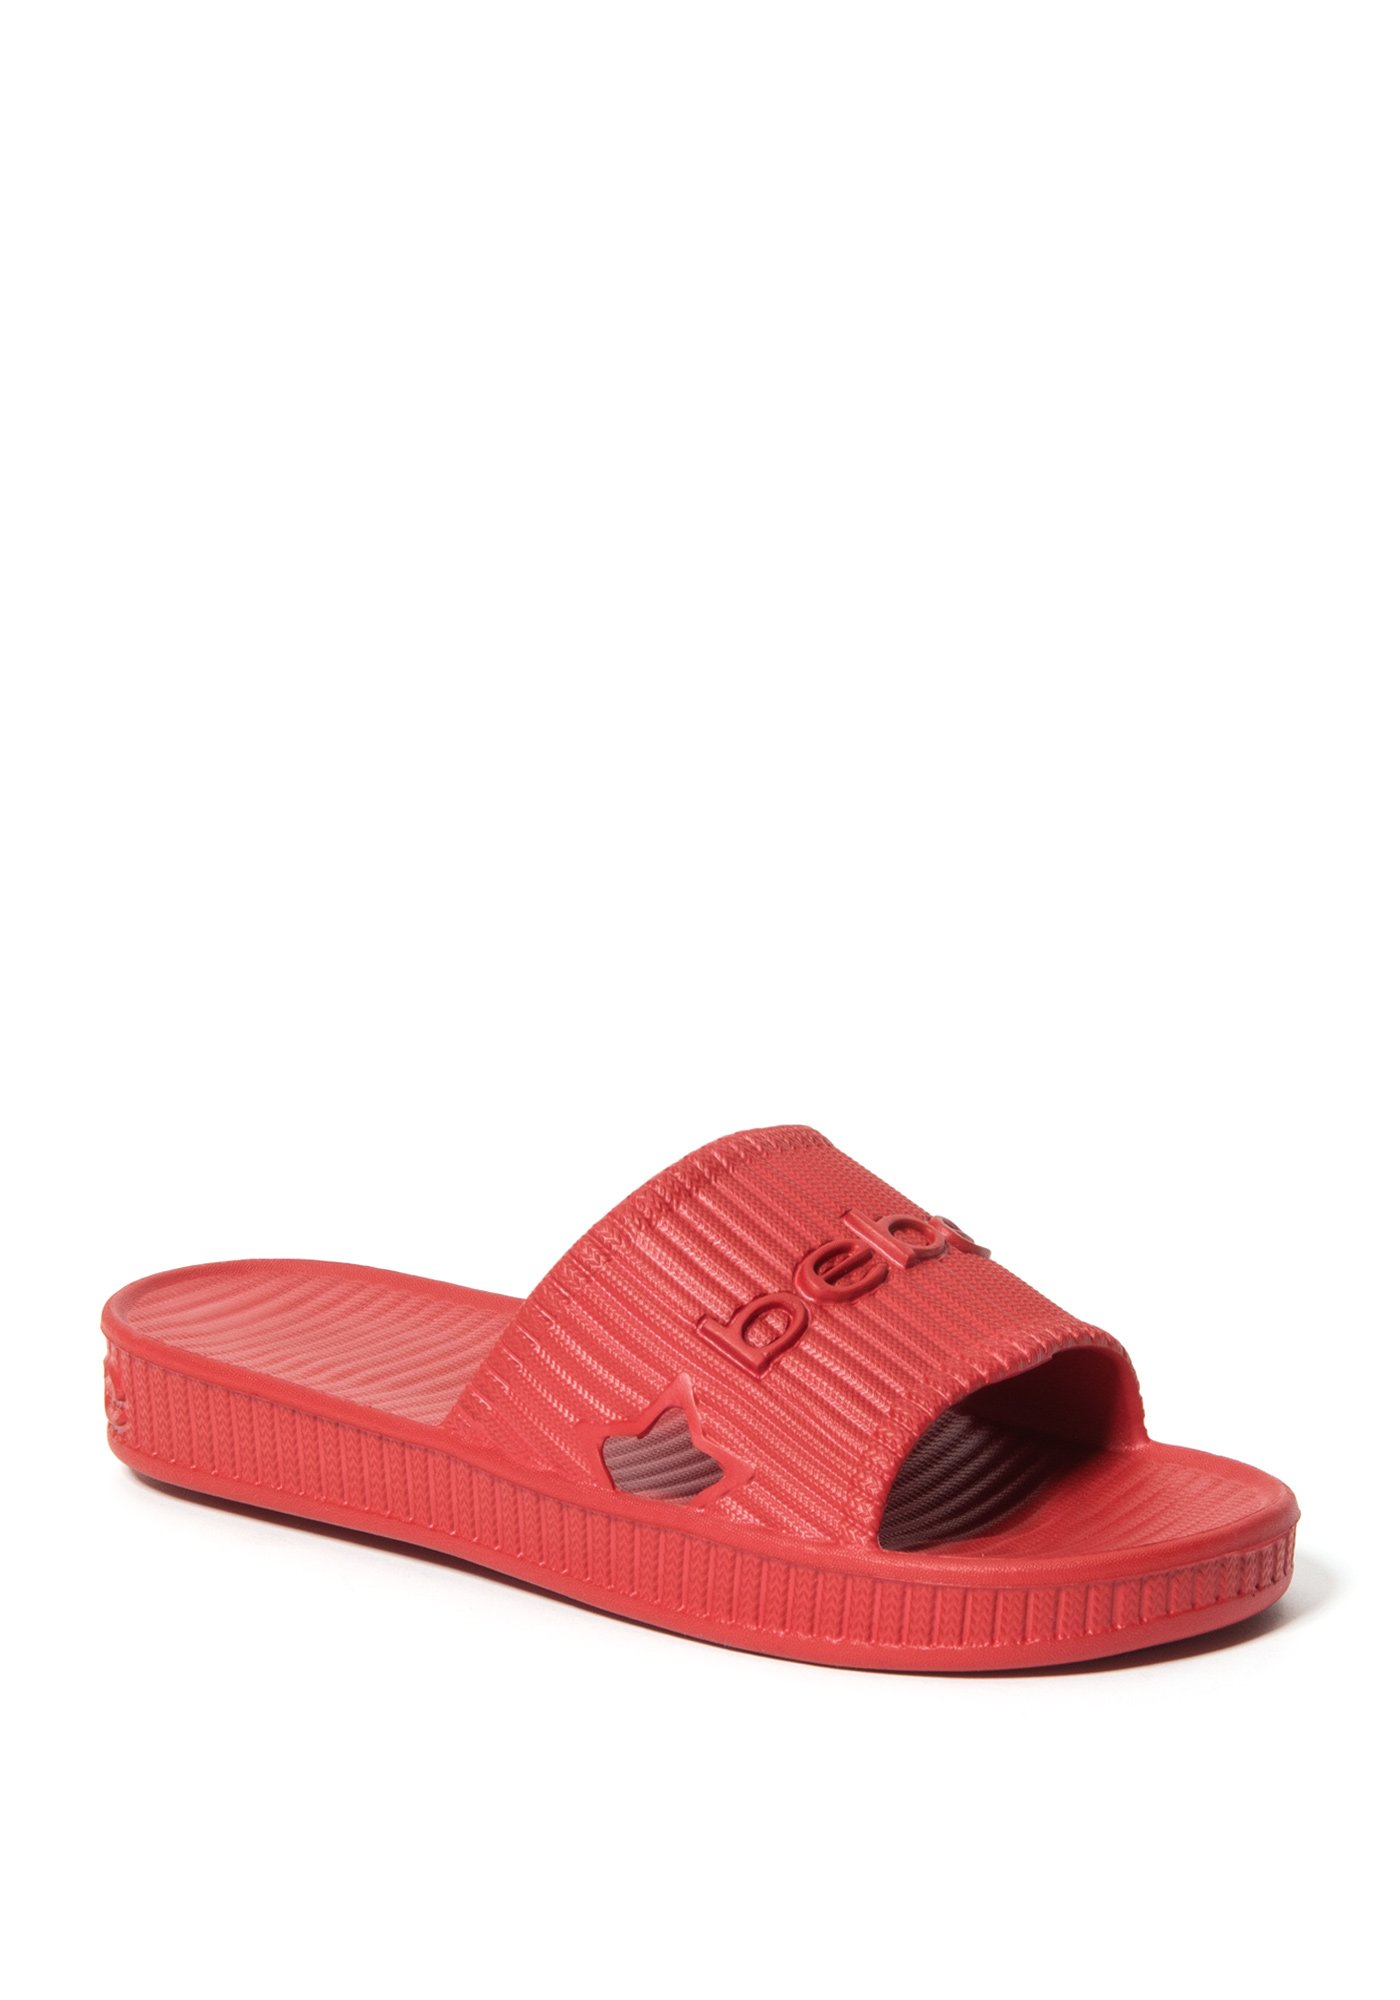 Bebe Women's Craze Logo Slides Shoe, Size 9 in Red O Synthetic